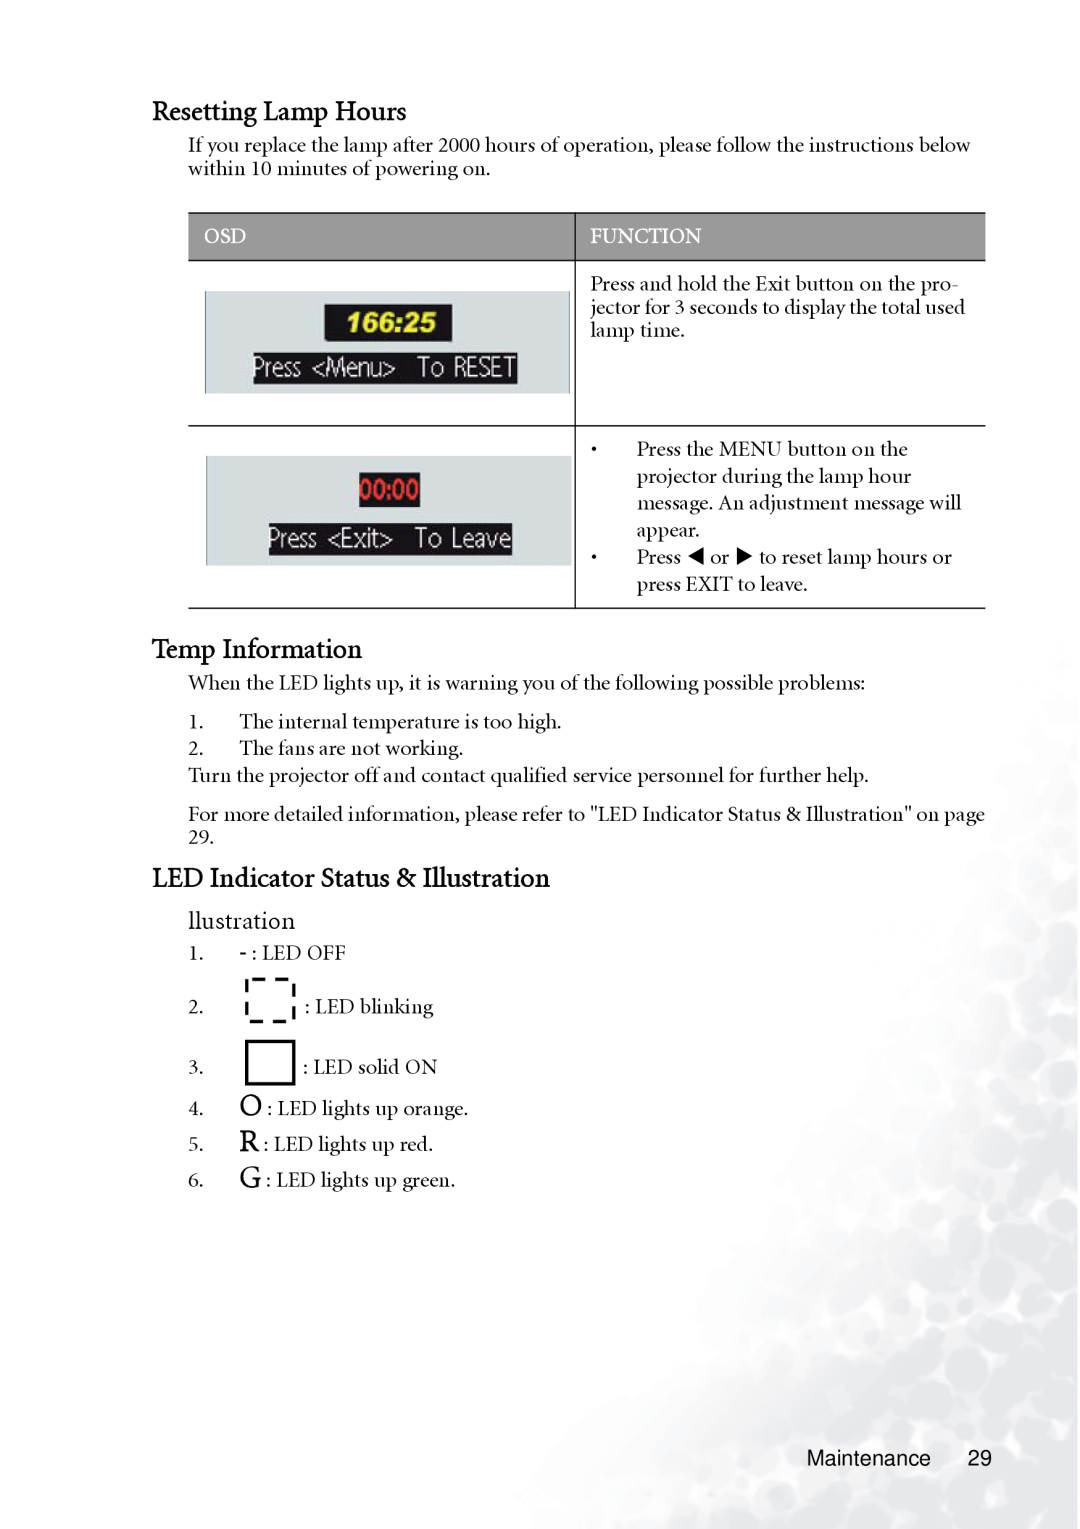 BenQ PB7230 manual Resetting Lamp Hours, Temp Information, LED Indicator Status & Illustration 